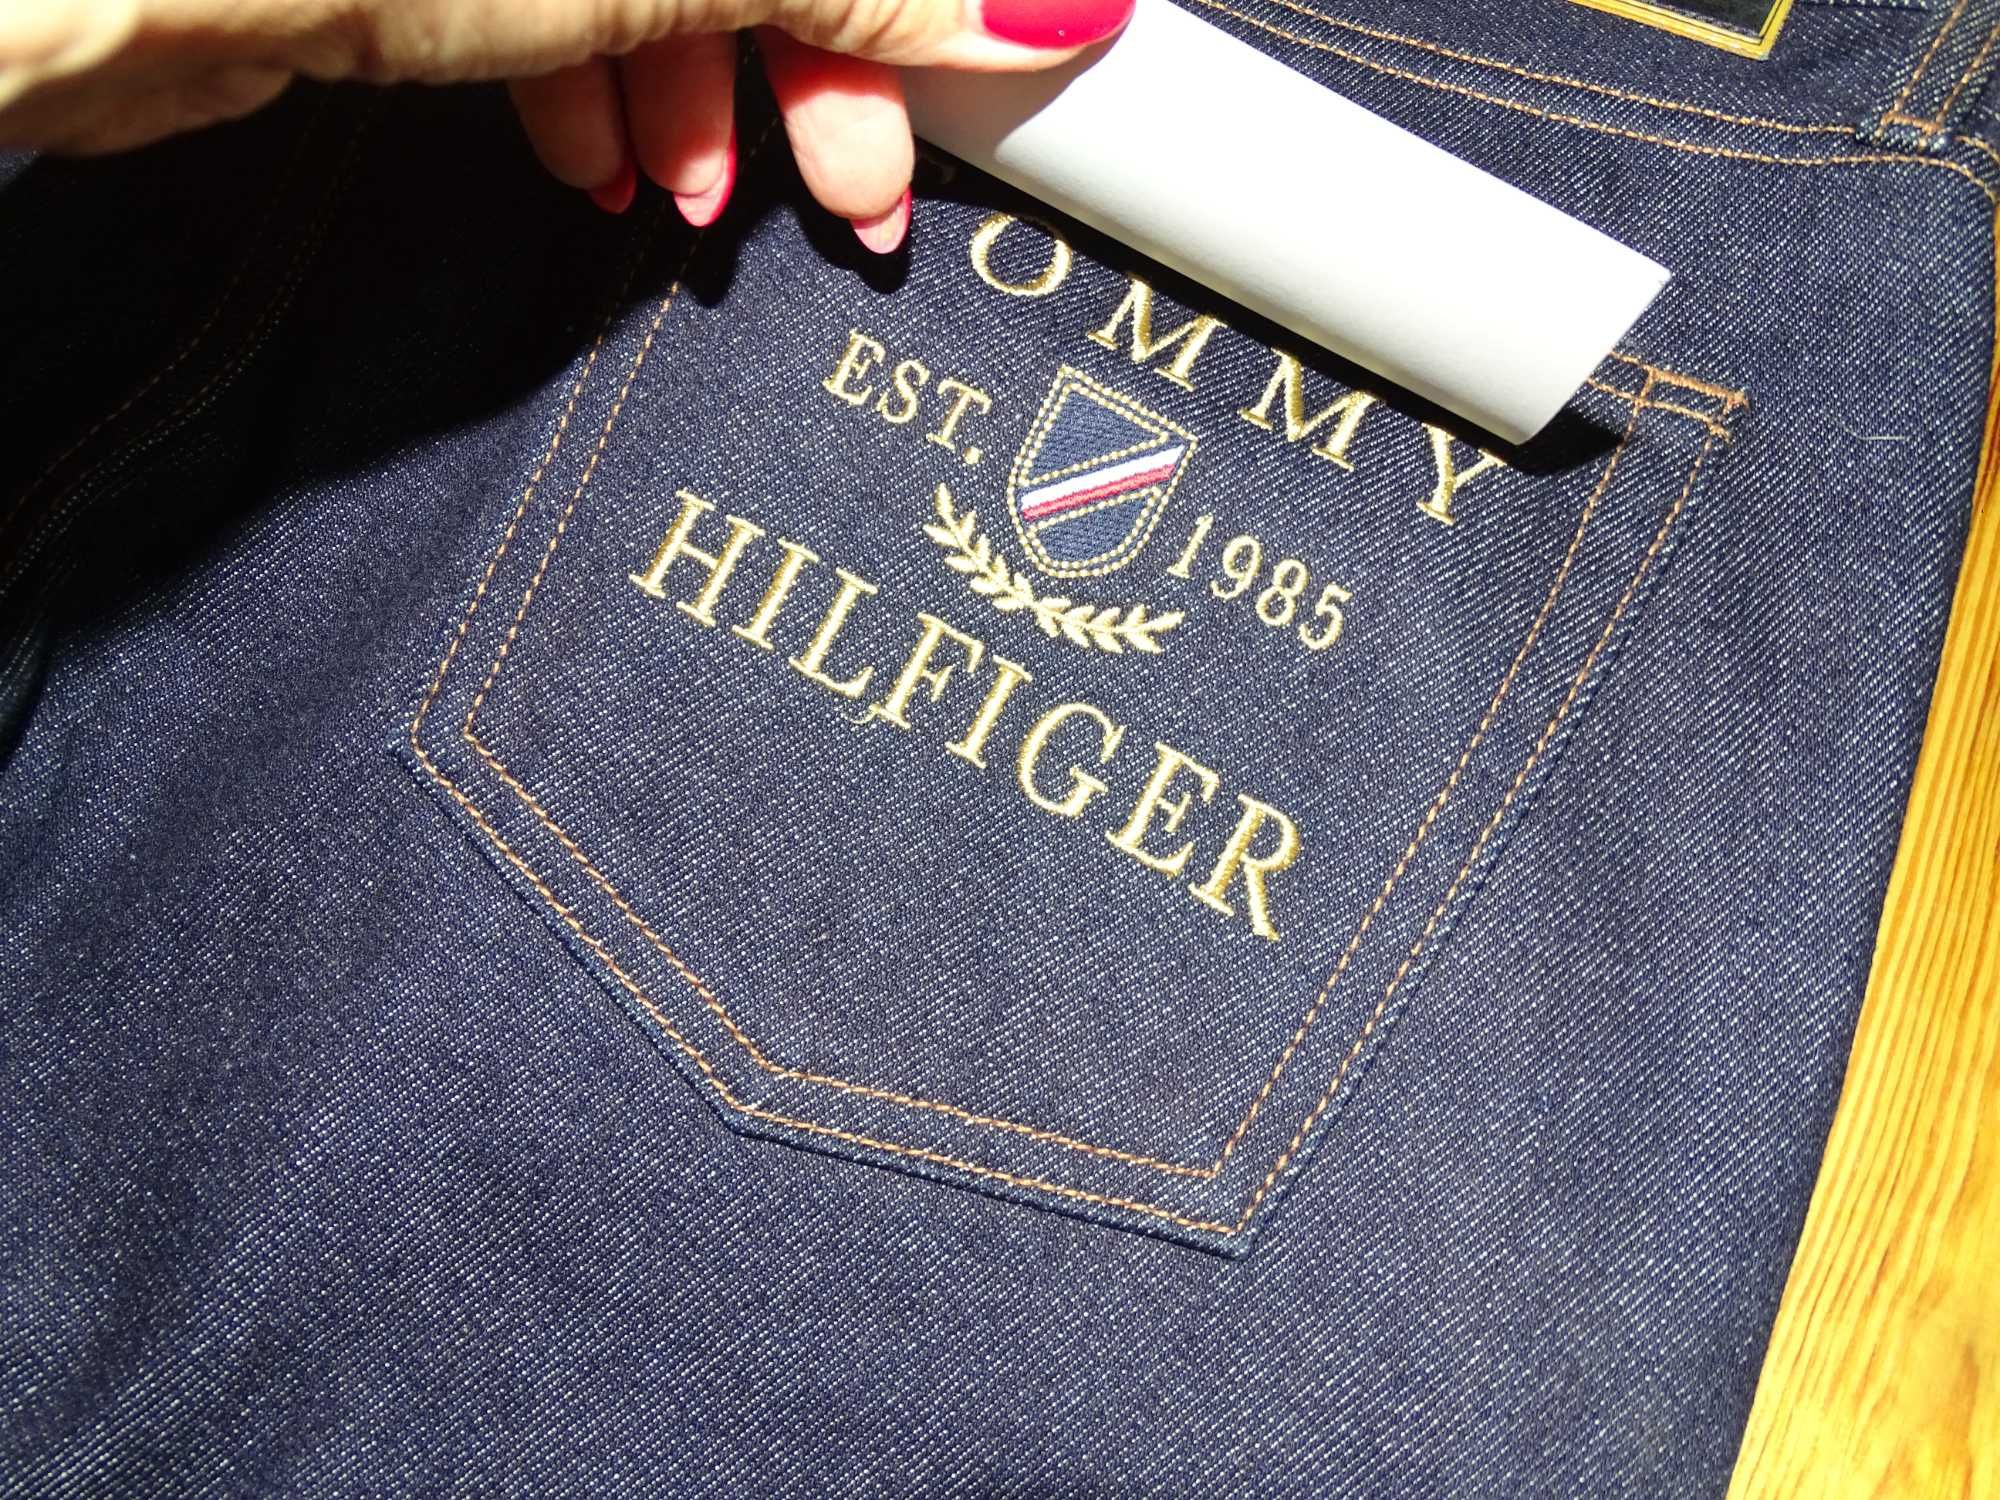 jeansy Tommy Hilfiger męskie 32x32 Nowe! Mercer Regular Fit